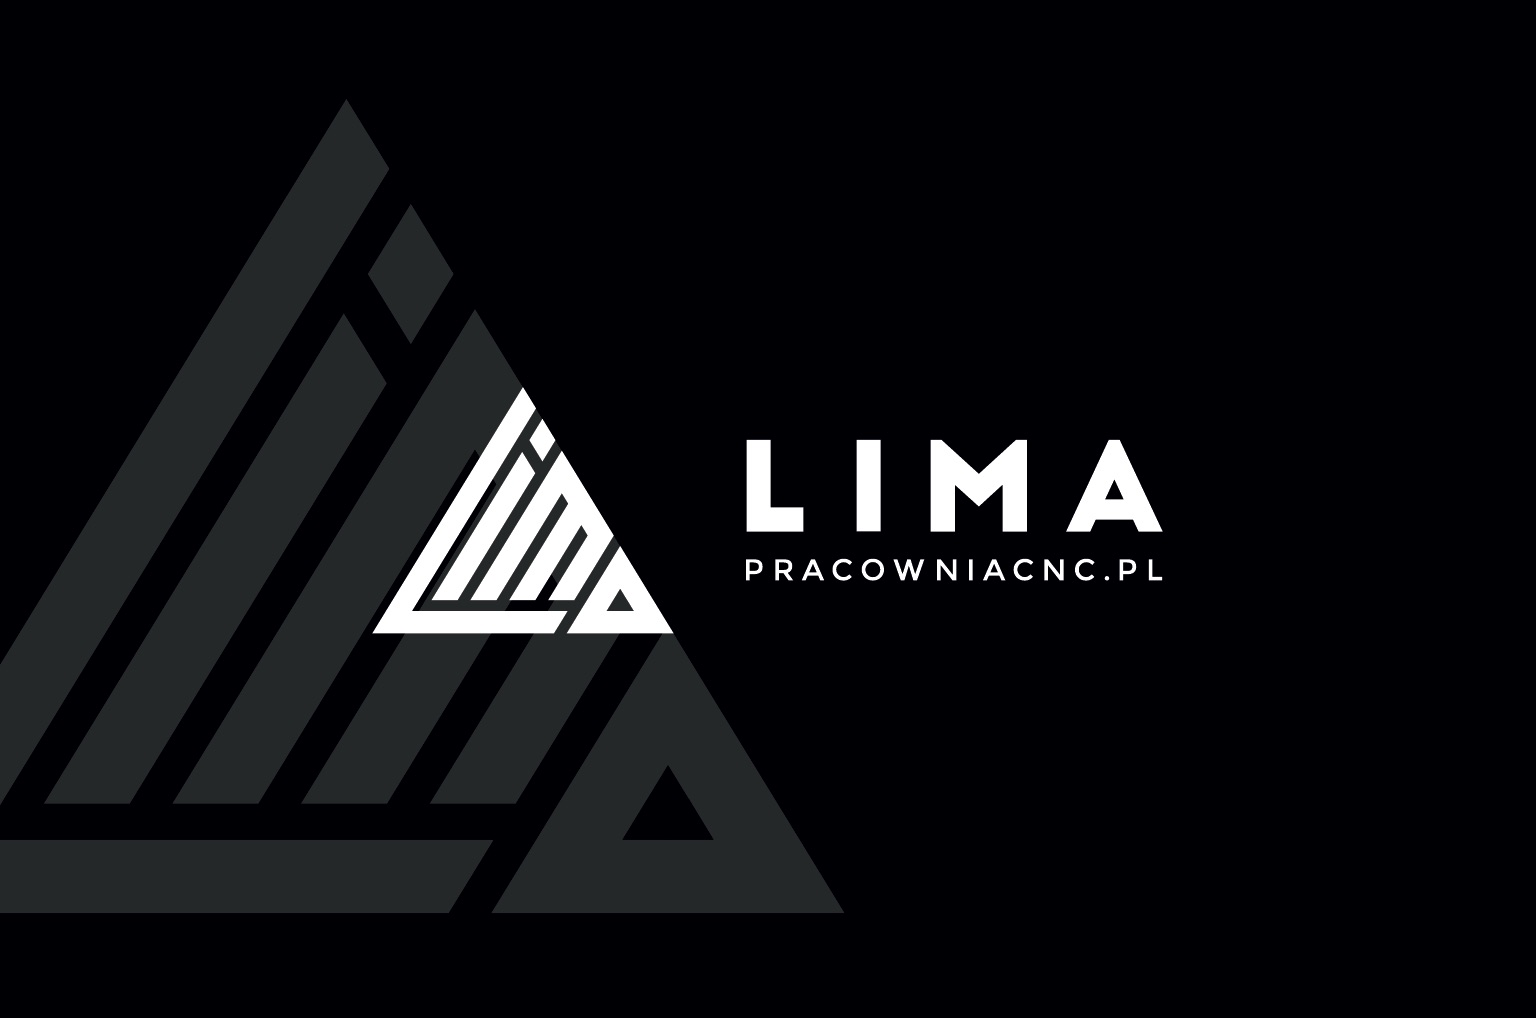 LIMA - pracownia CNC